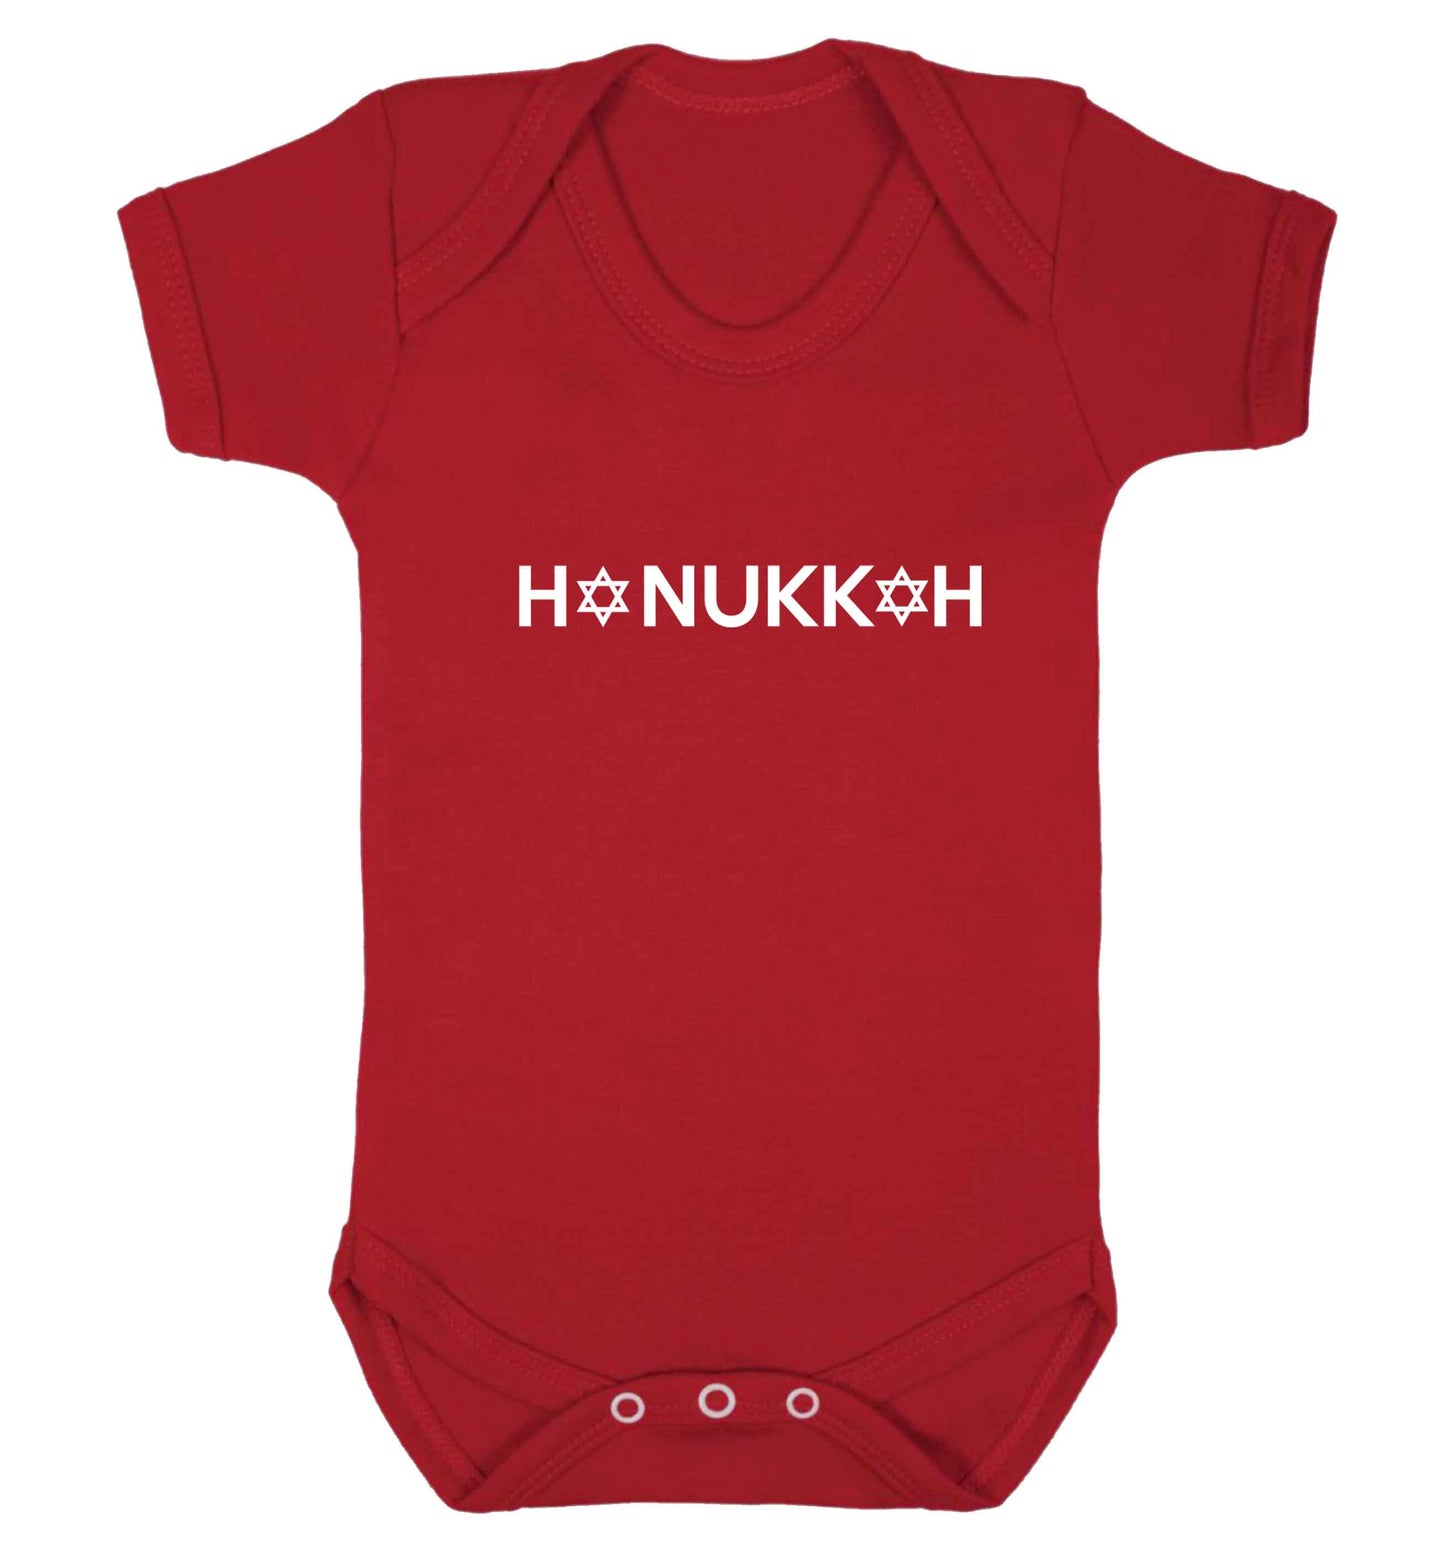 Hanukkah star of david baby vest red 18-24 months